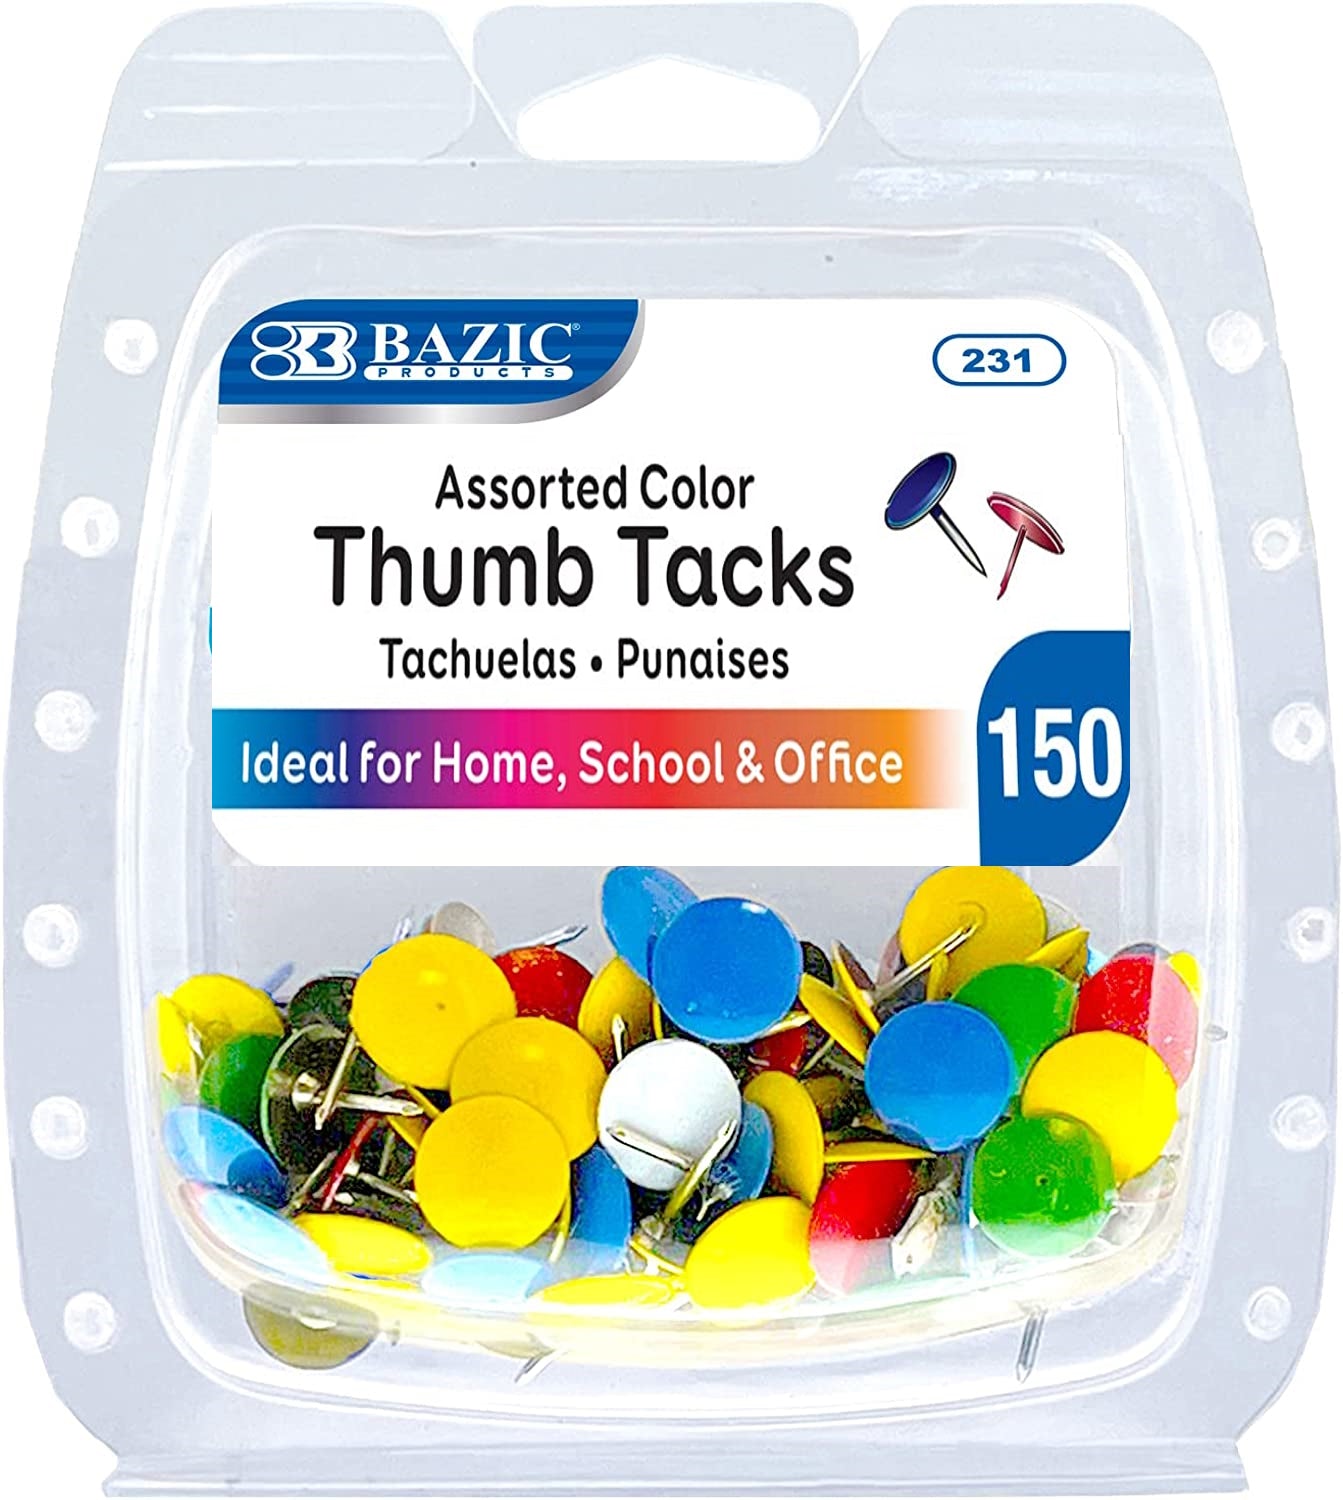 150 Assorted Colored Thumb Tacks, Multi-Color Thumb Tacks